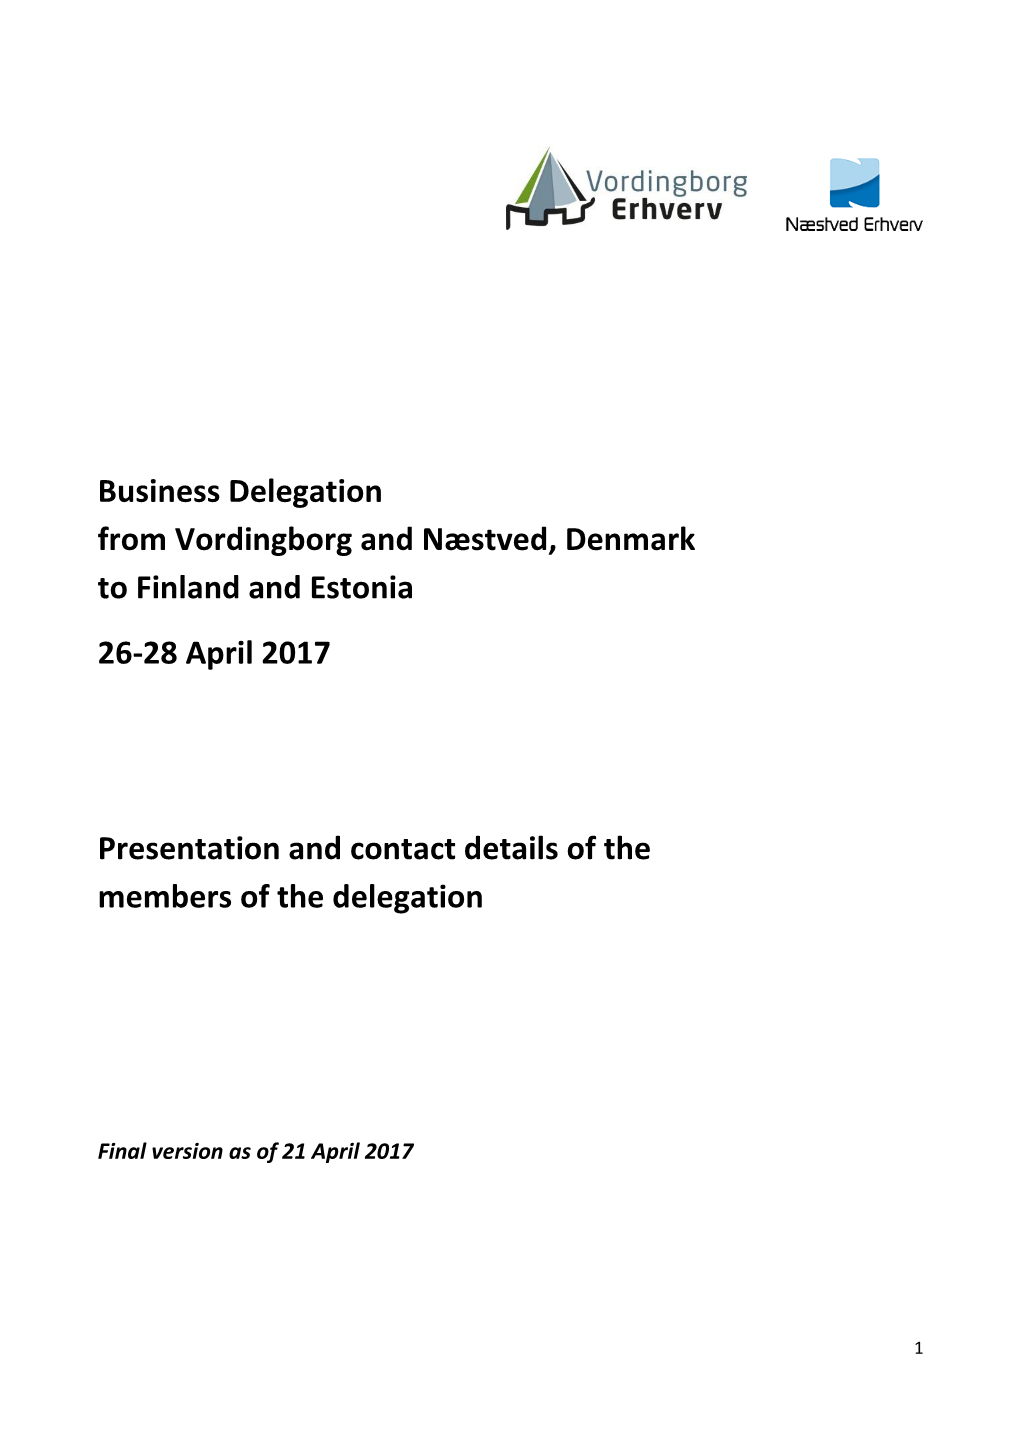 Business Delegation from Vordingborg and Næstved, Denmark to Finland and Estonia 26-28 April 2017